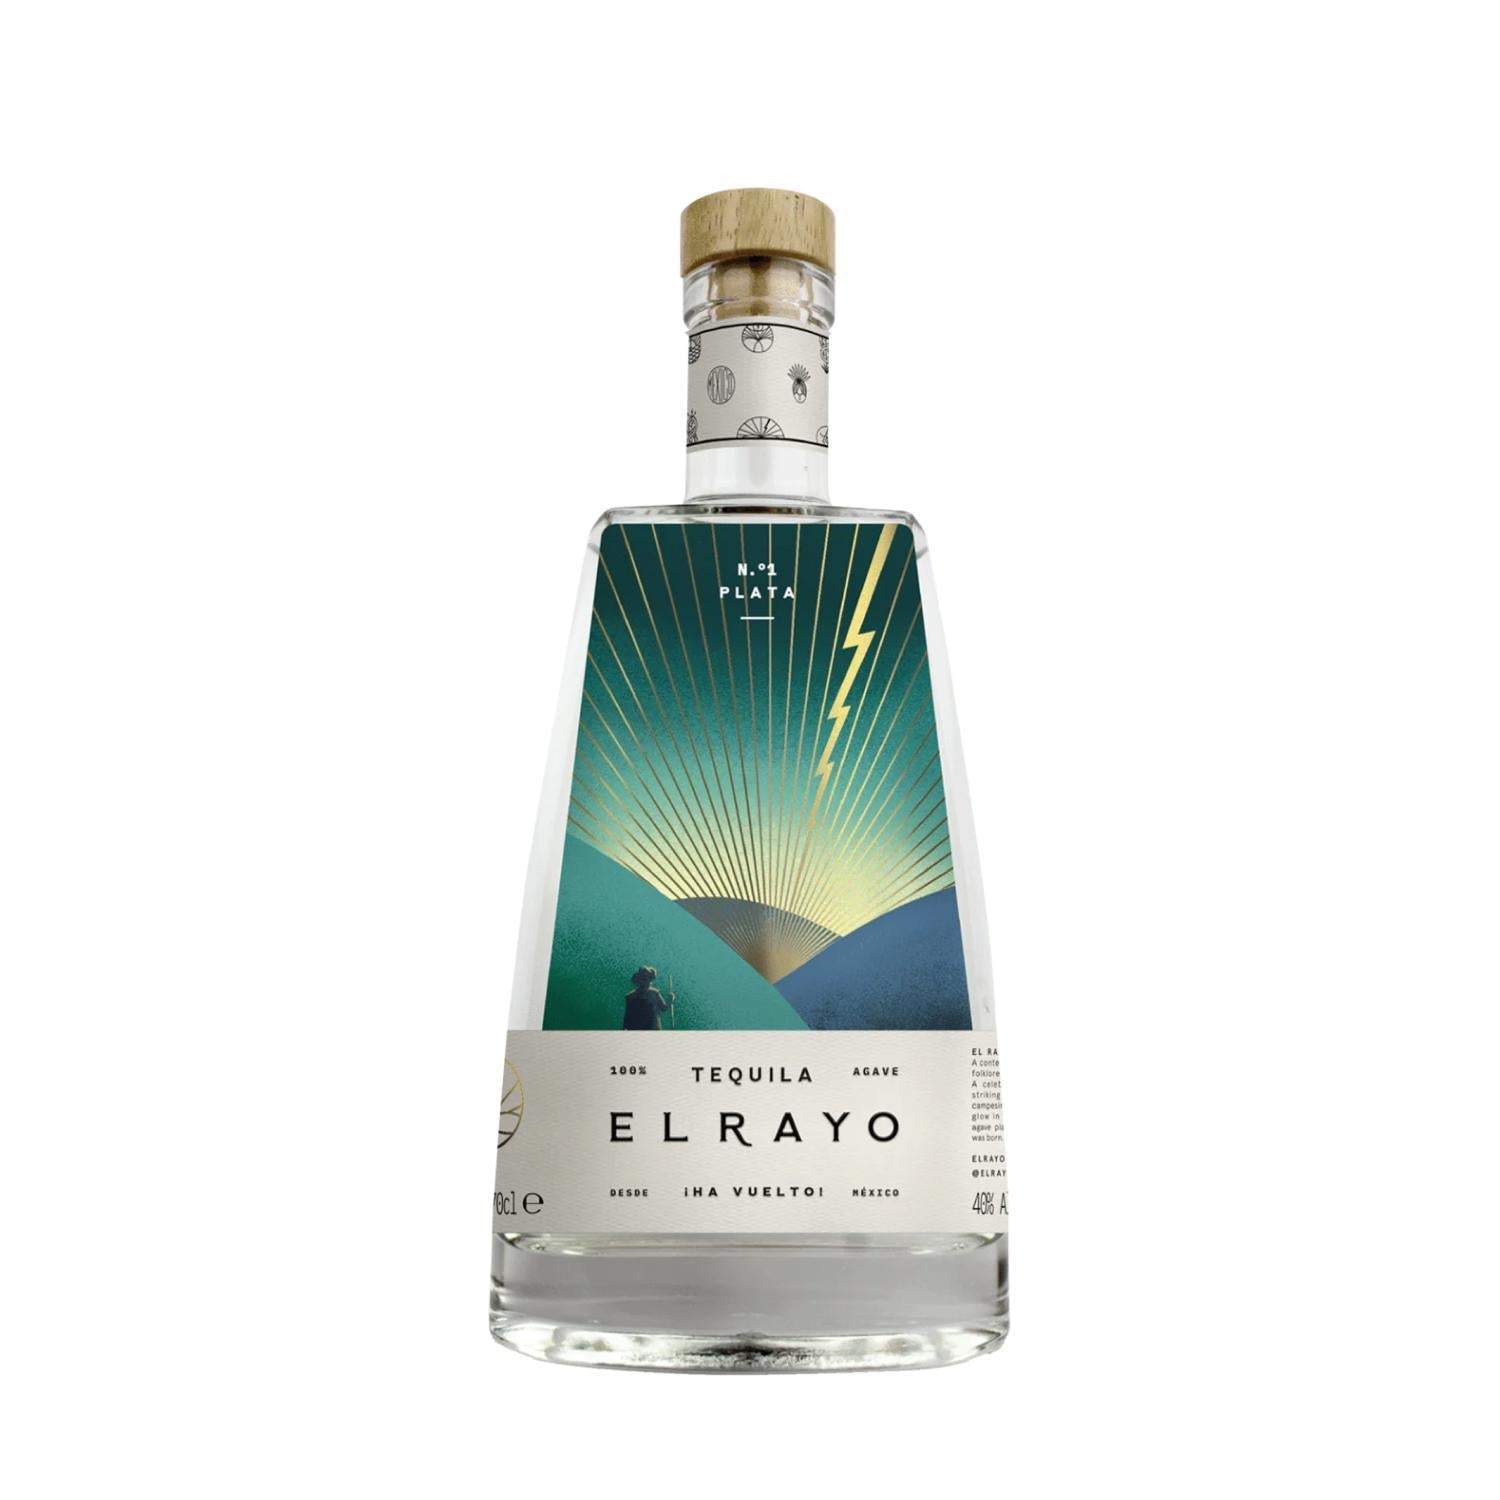 El Rayo - PLATA (Tequila)